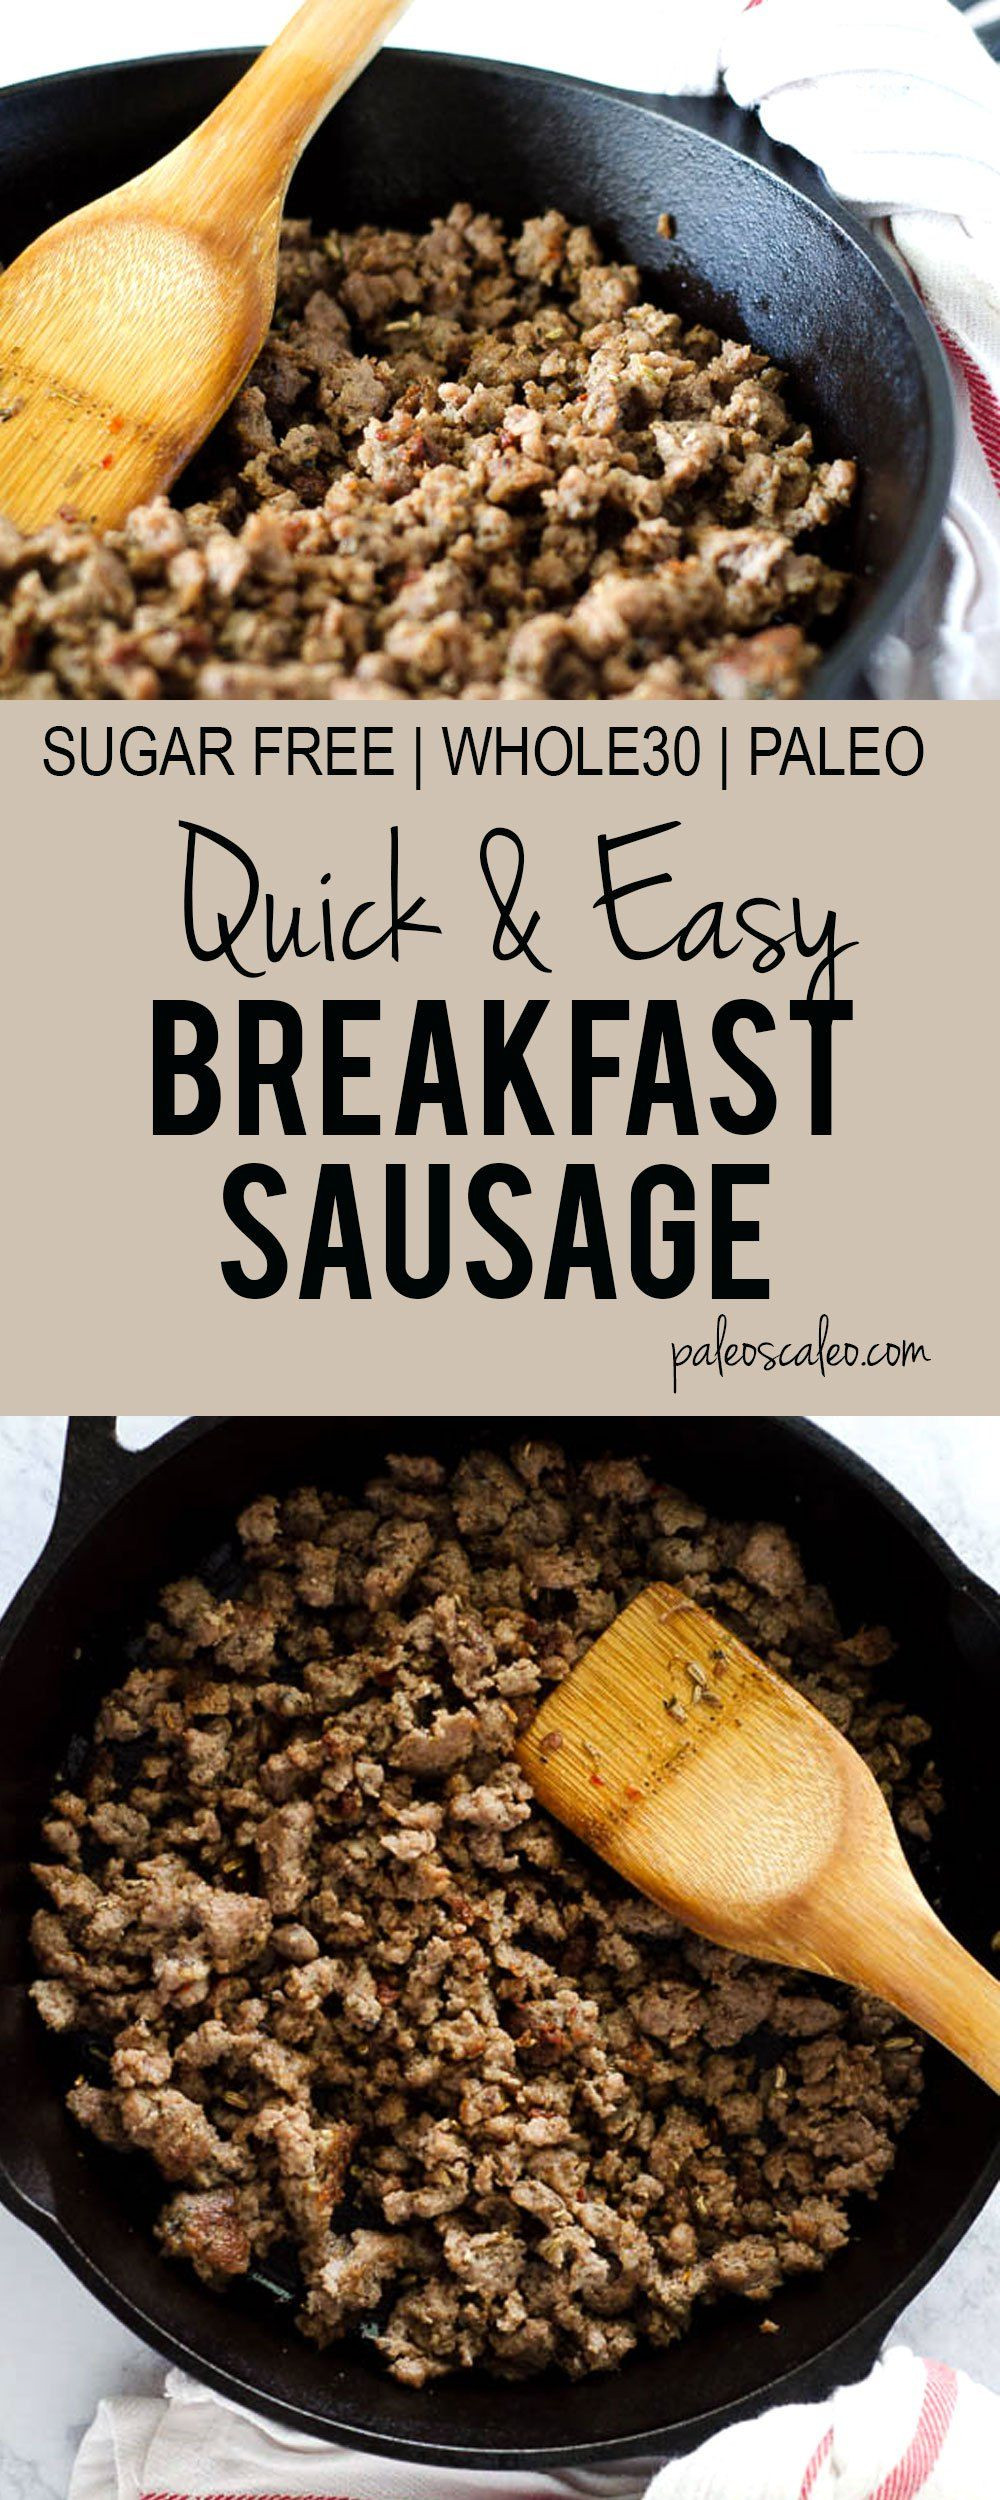 Breakfast Sausage Seasoning Recipe
 Quick & Easy Breakfast Sausage Recipe